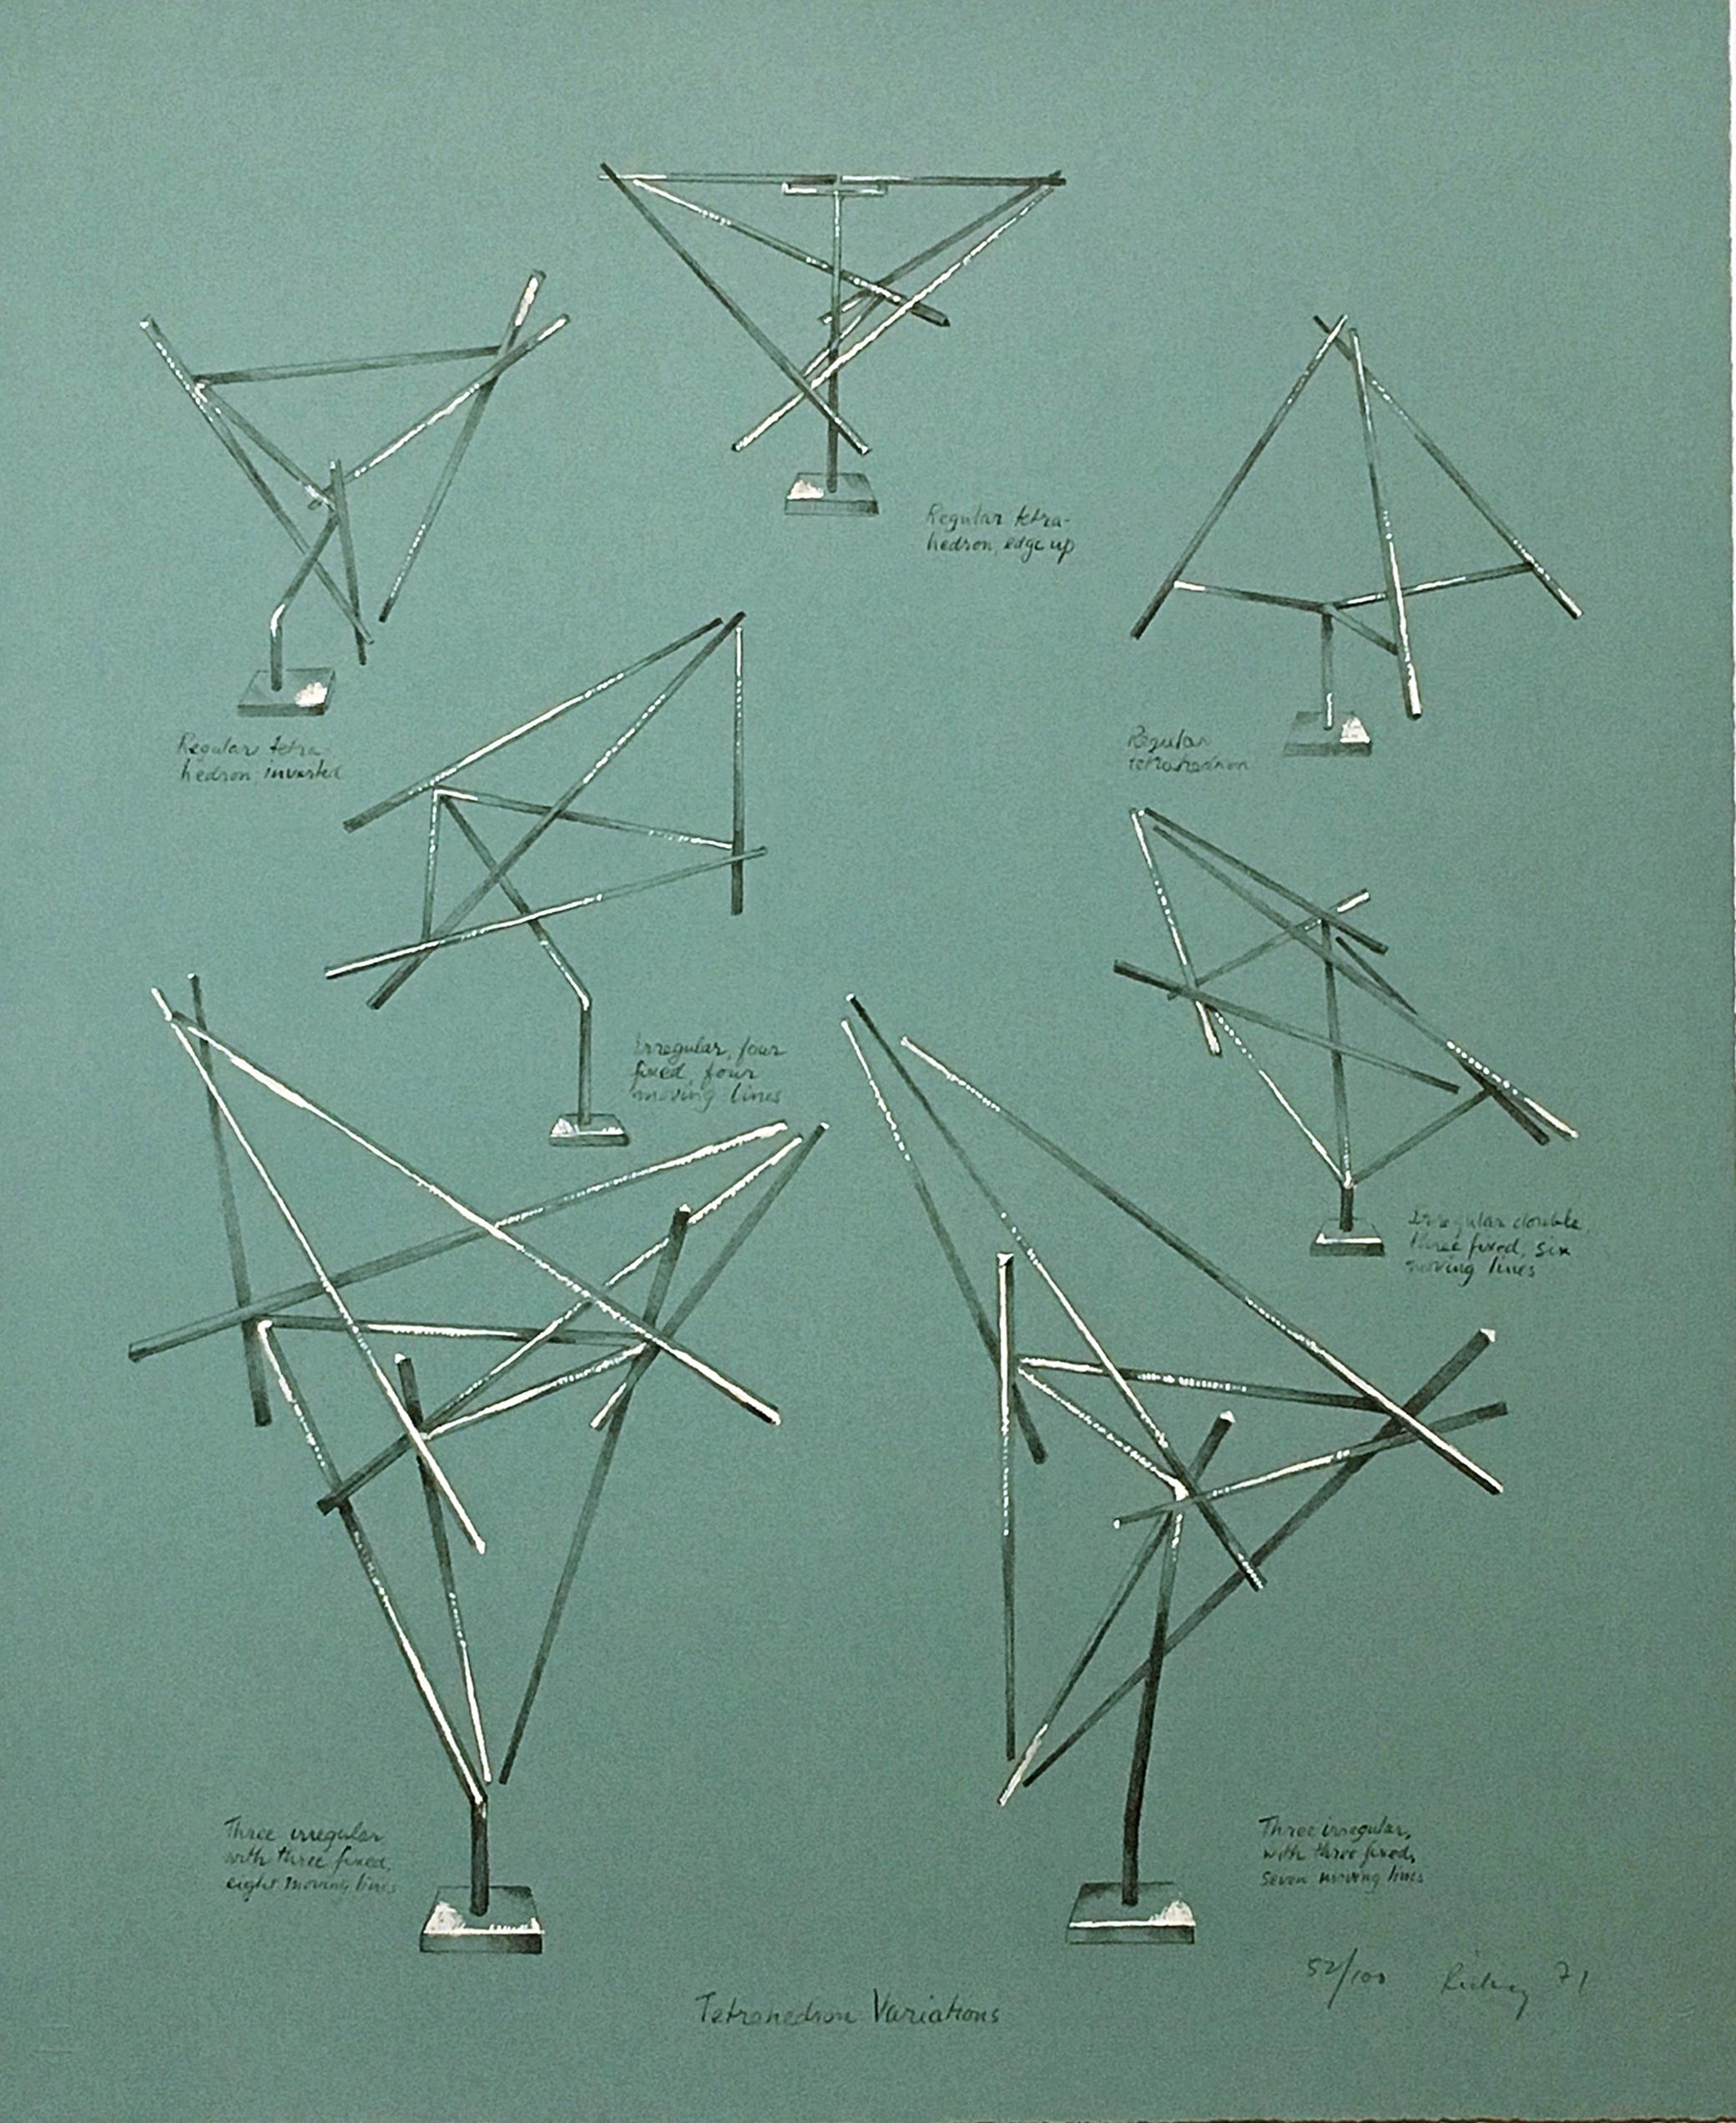 Tetrahedron Variations (86, Verlag Marburg)